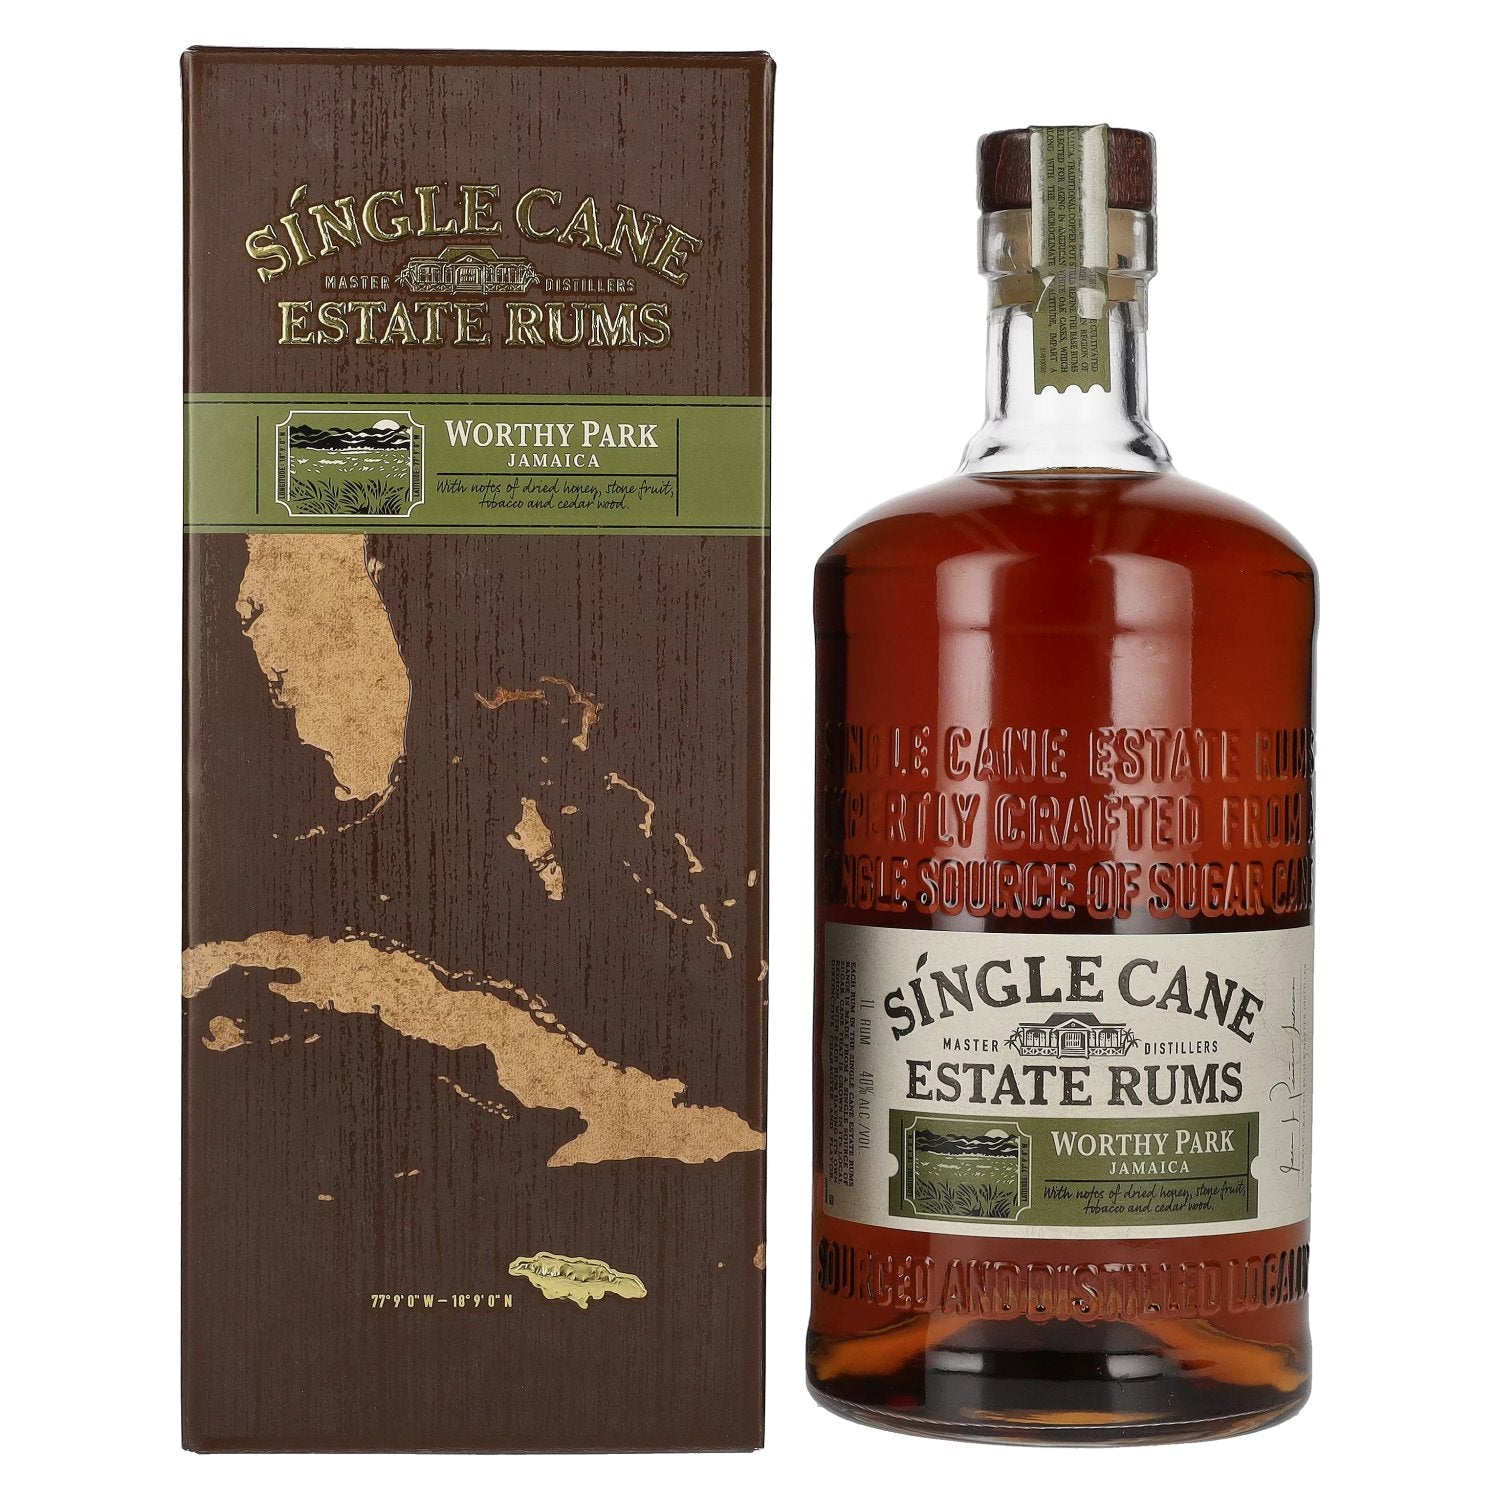 Single Cane Estate Rums WORTHY PARK JAMAICA 40% Vol. 1l in Giftbox